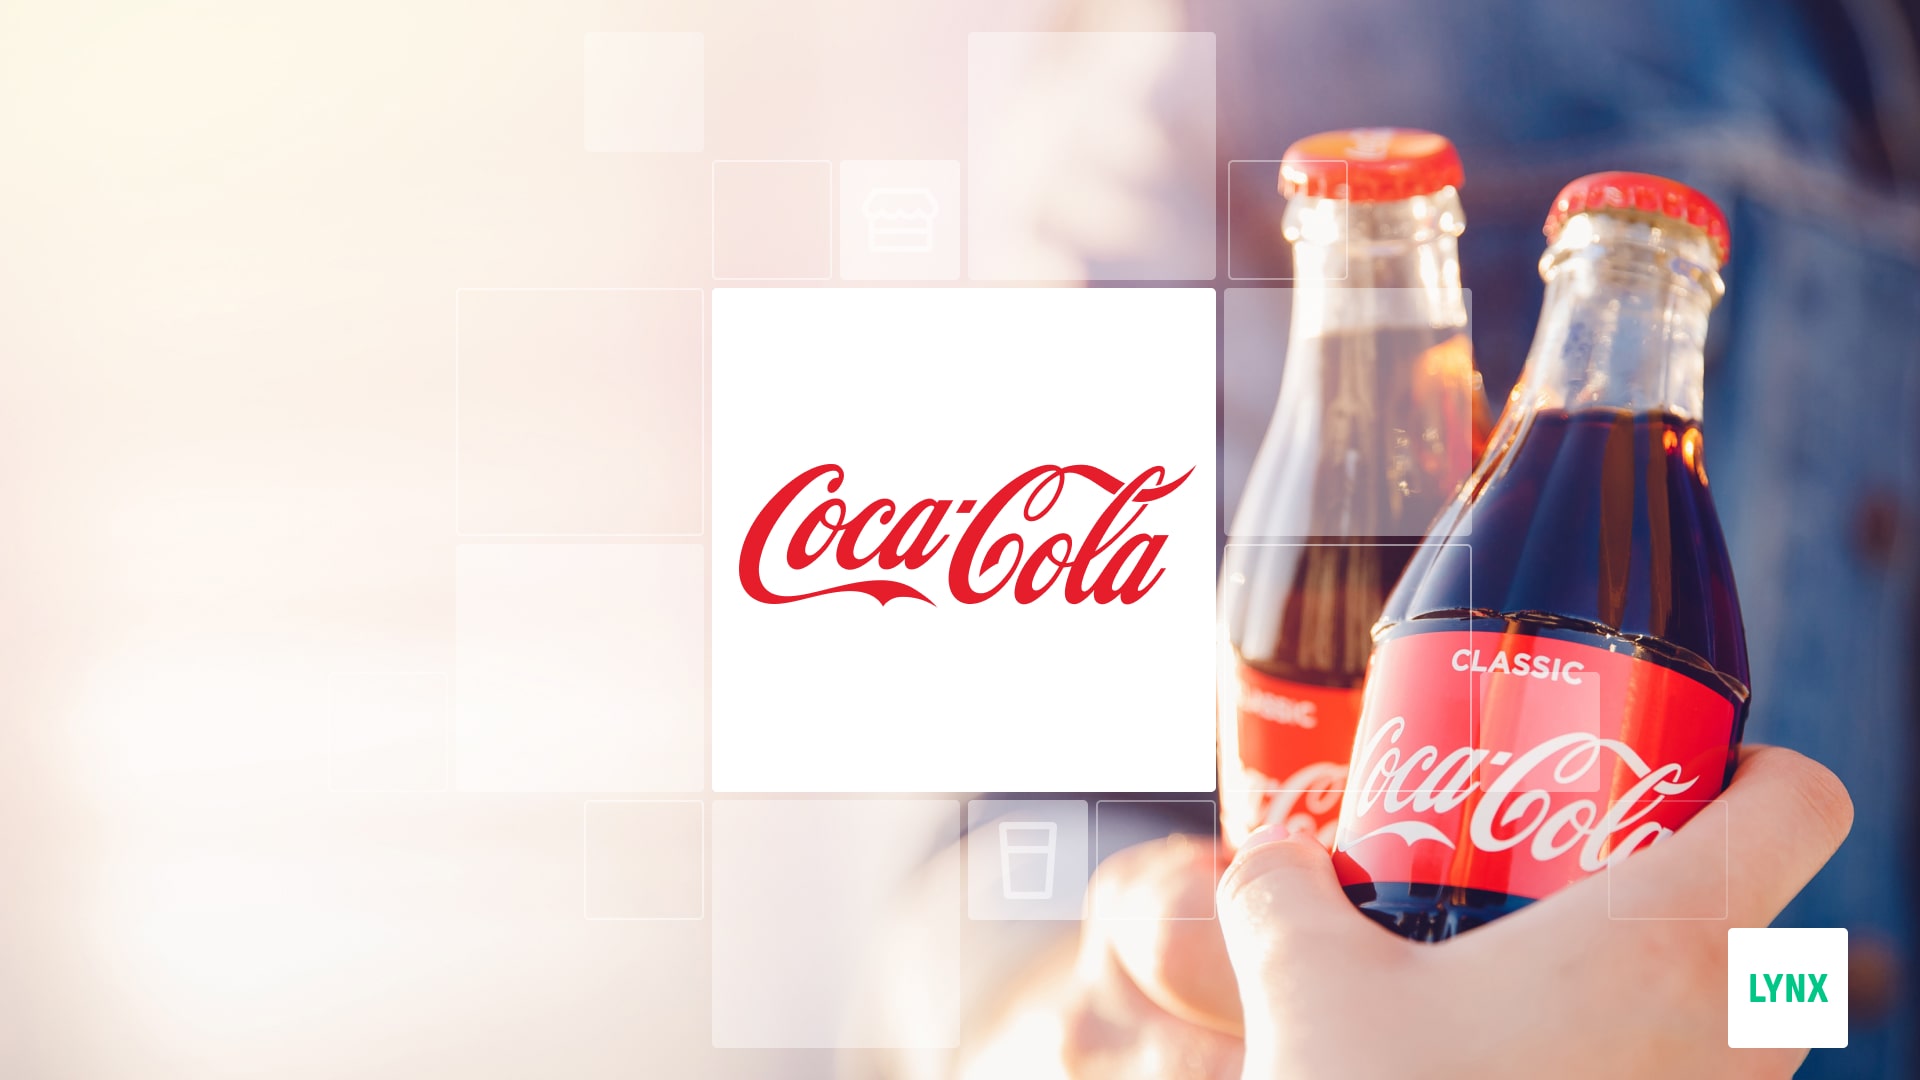 Nápoje společnosti Coca-Cola